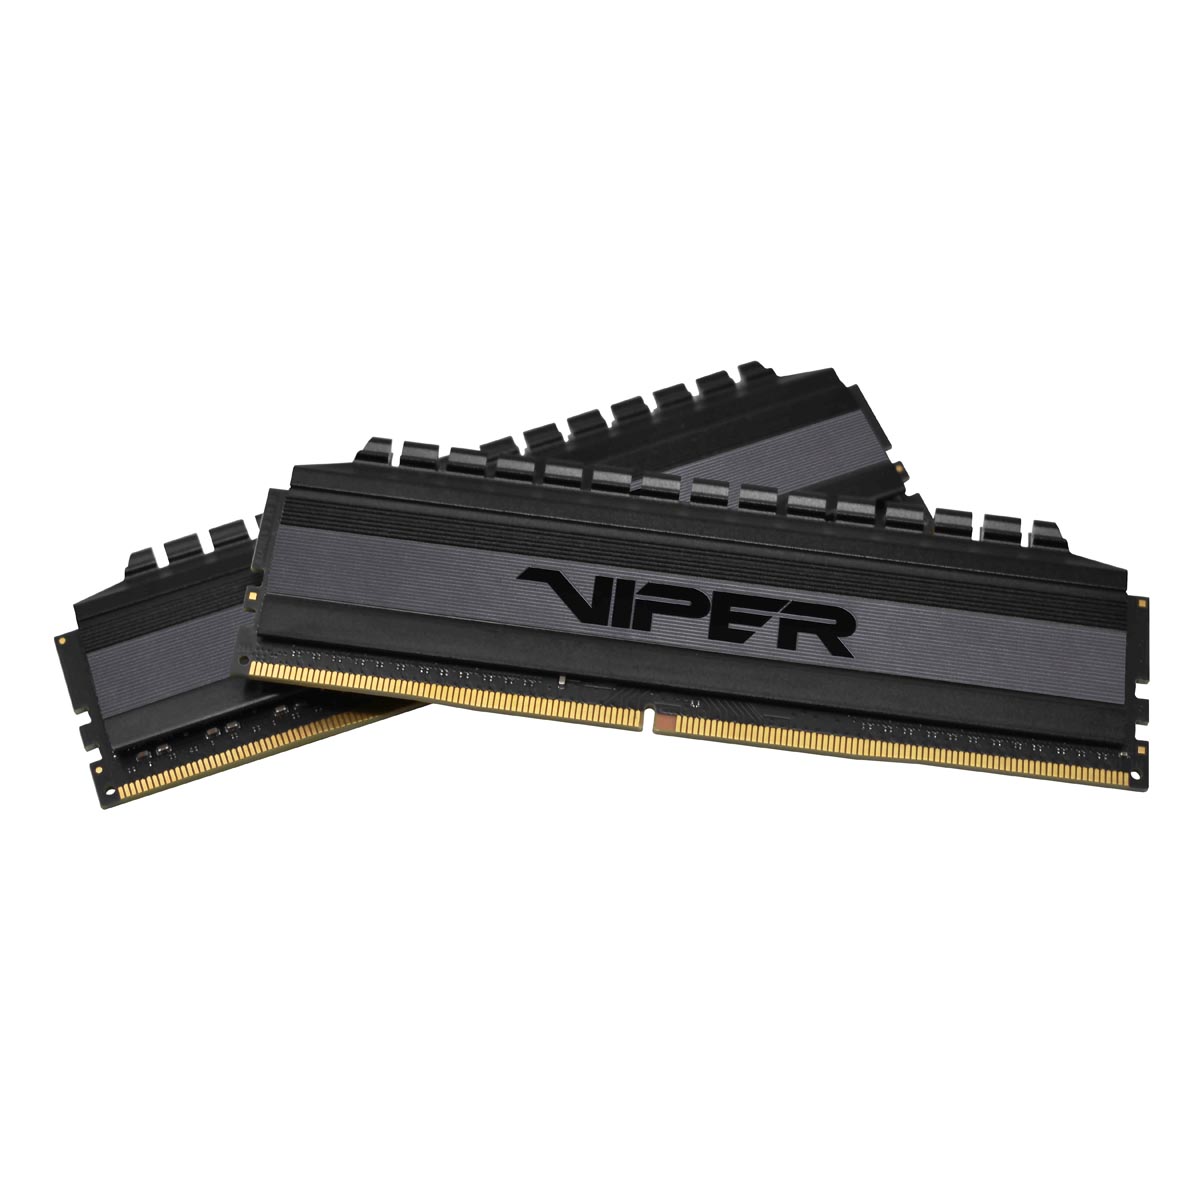 VIPER GAMING by PATRIOT prezentuje nowe, szybsze moduły pamięci VIPER 4 BLACKOUT